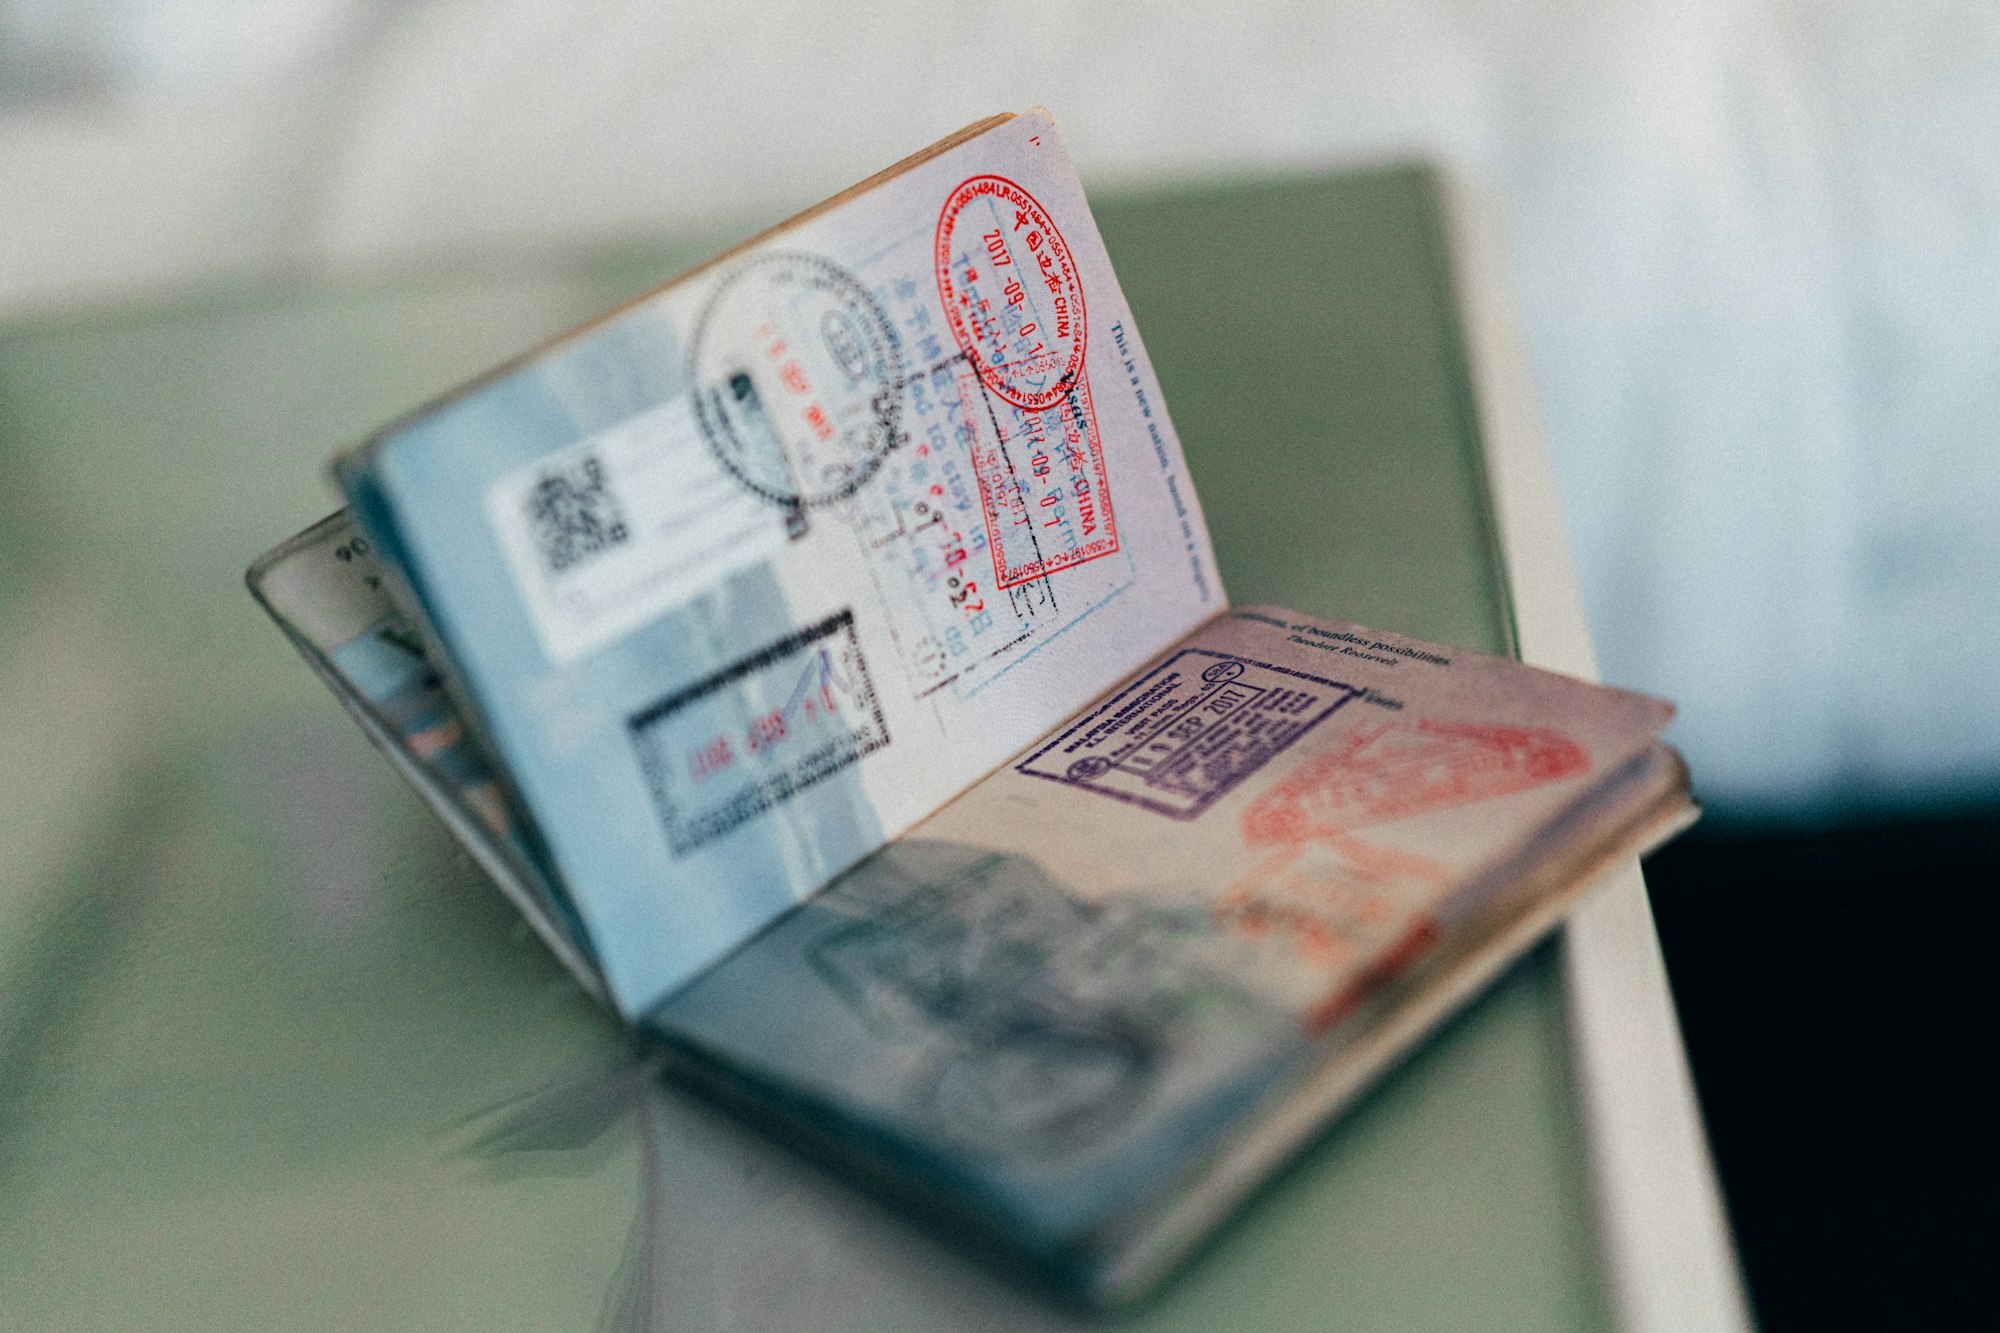 Indians can apply for Schengen visas online after 2026